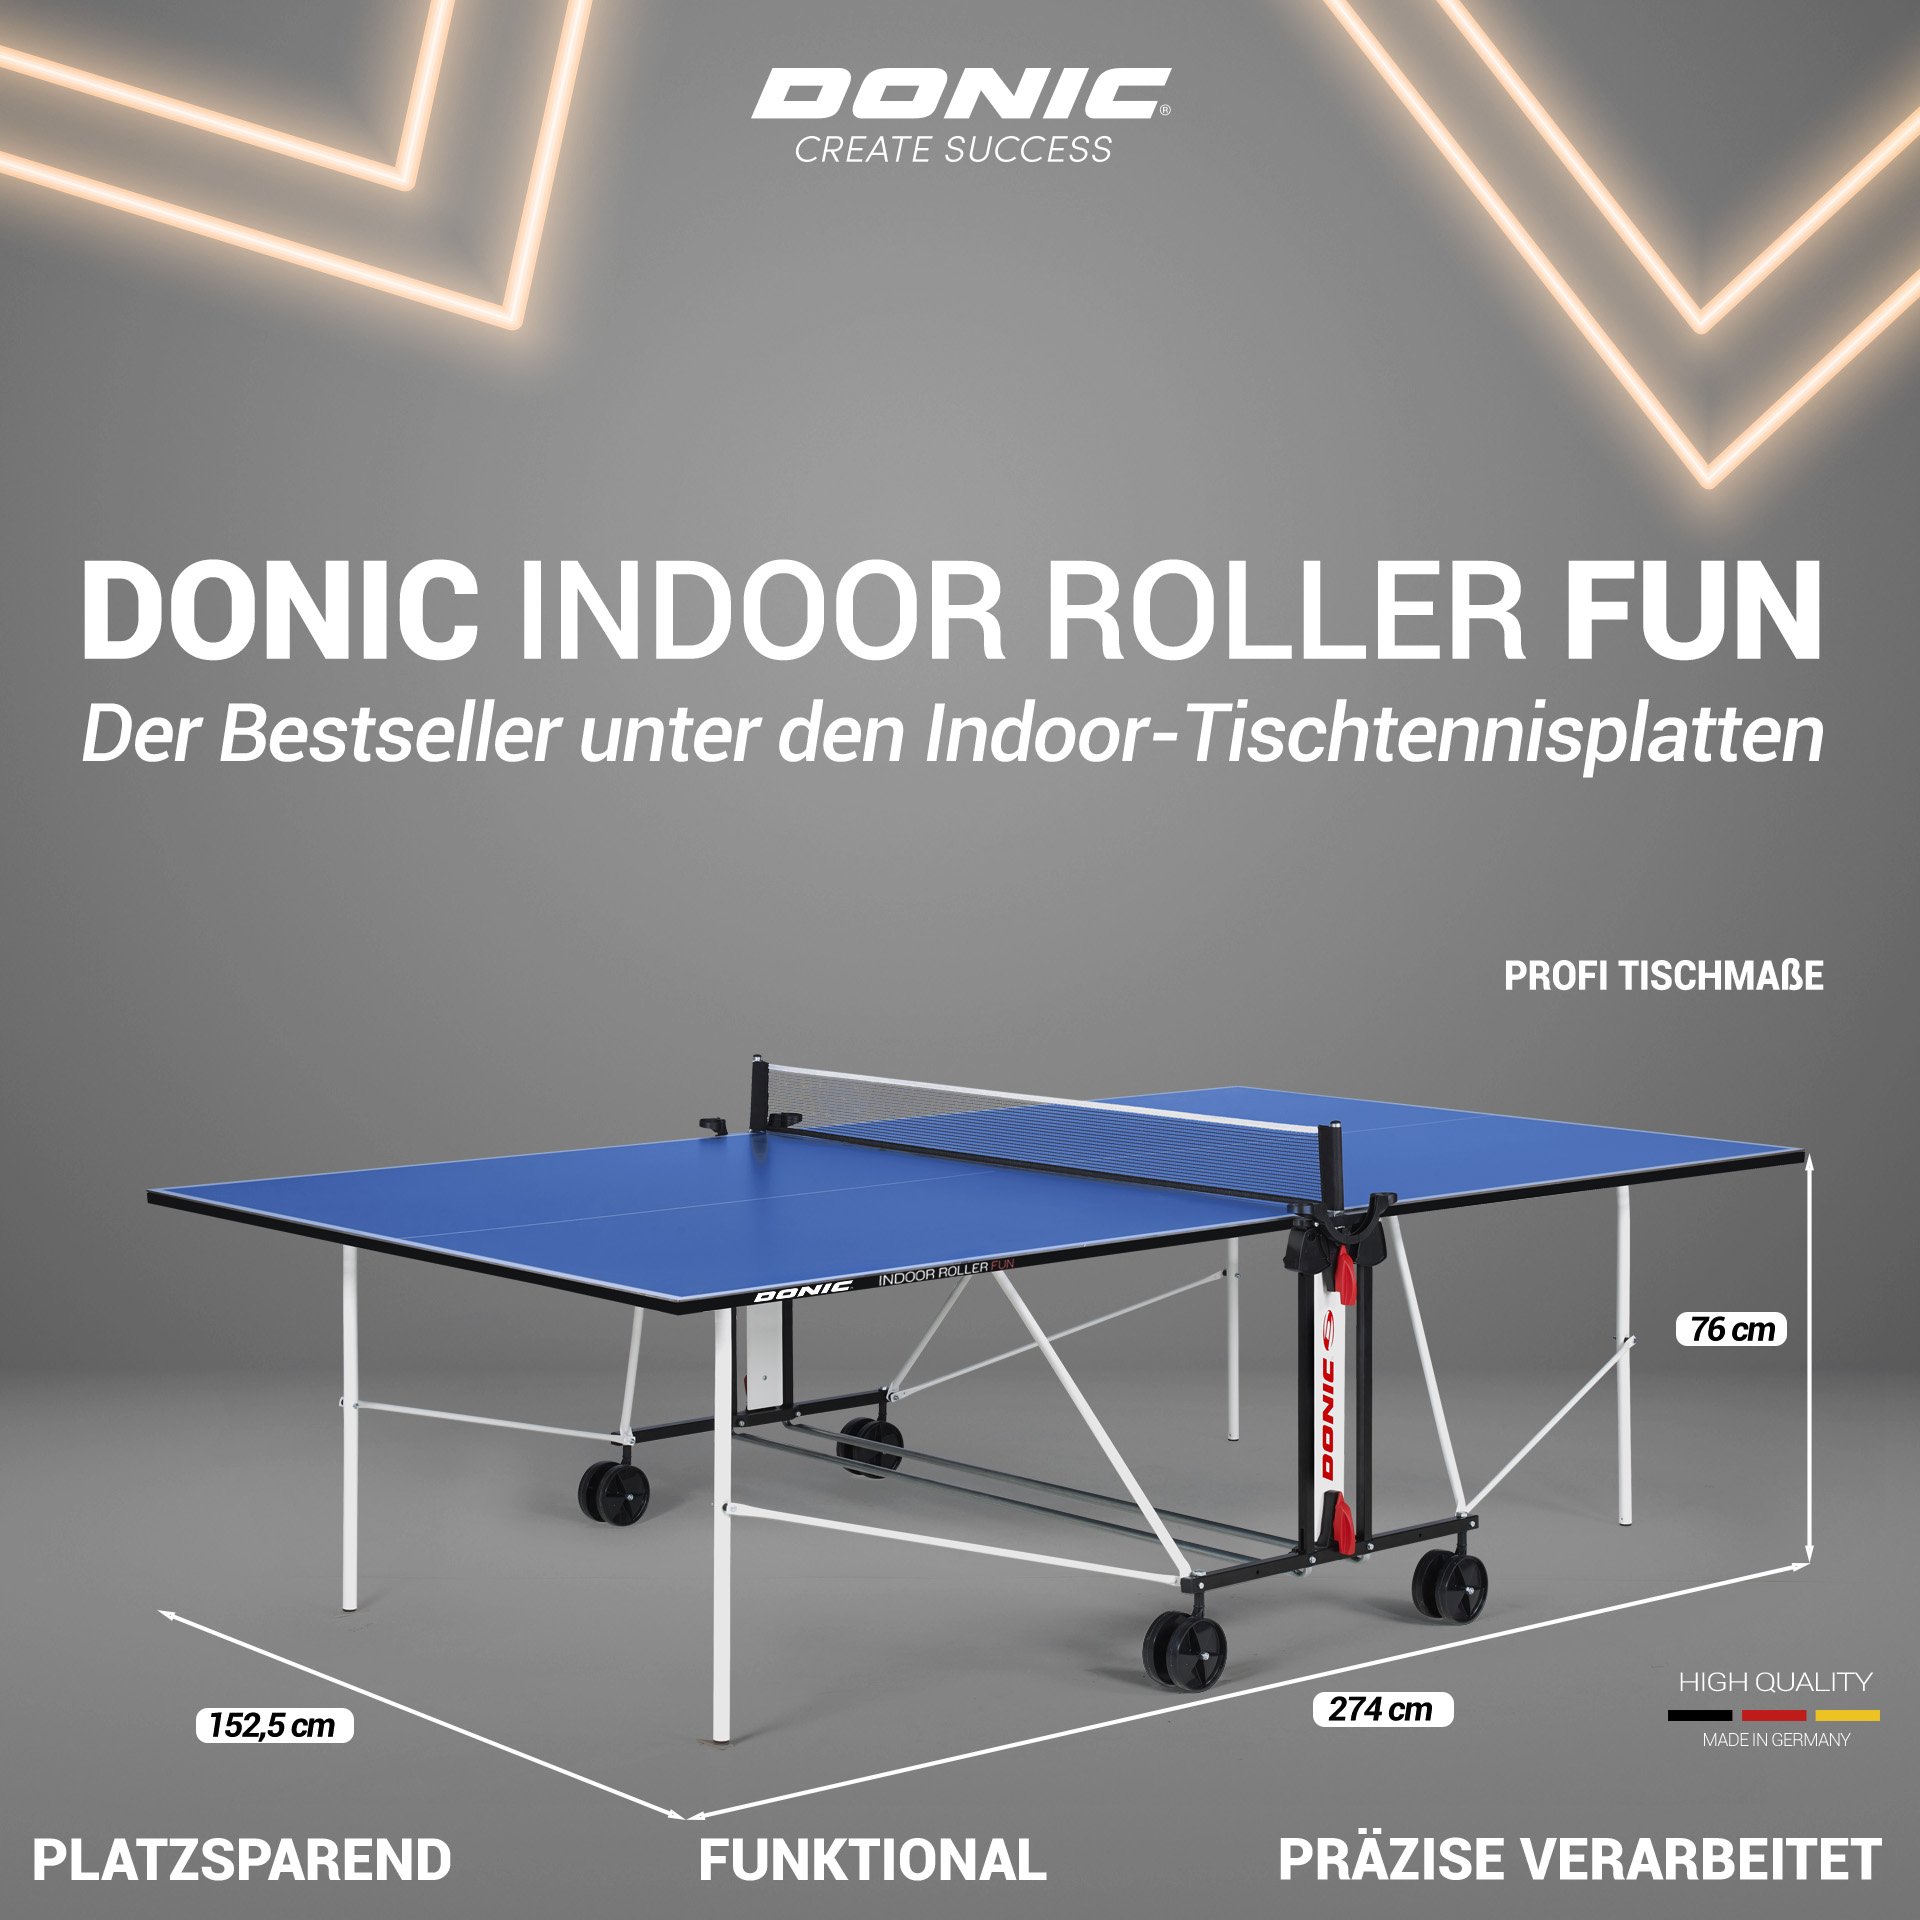 Donic Indoor Roller Fun | SUCCESS CREATE